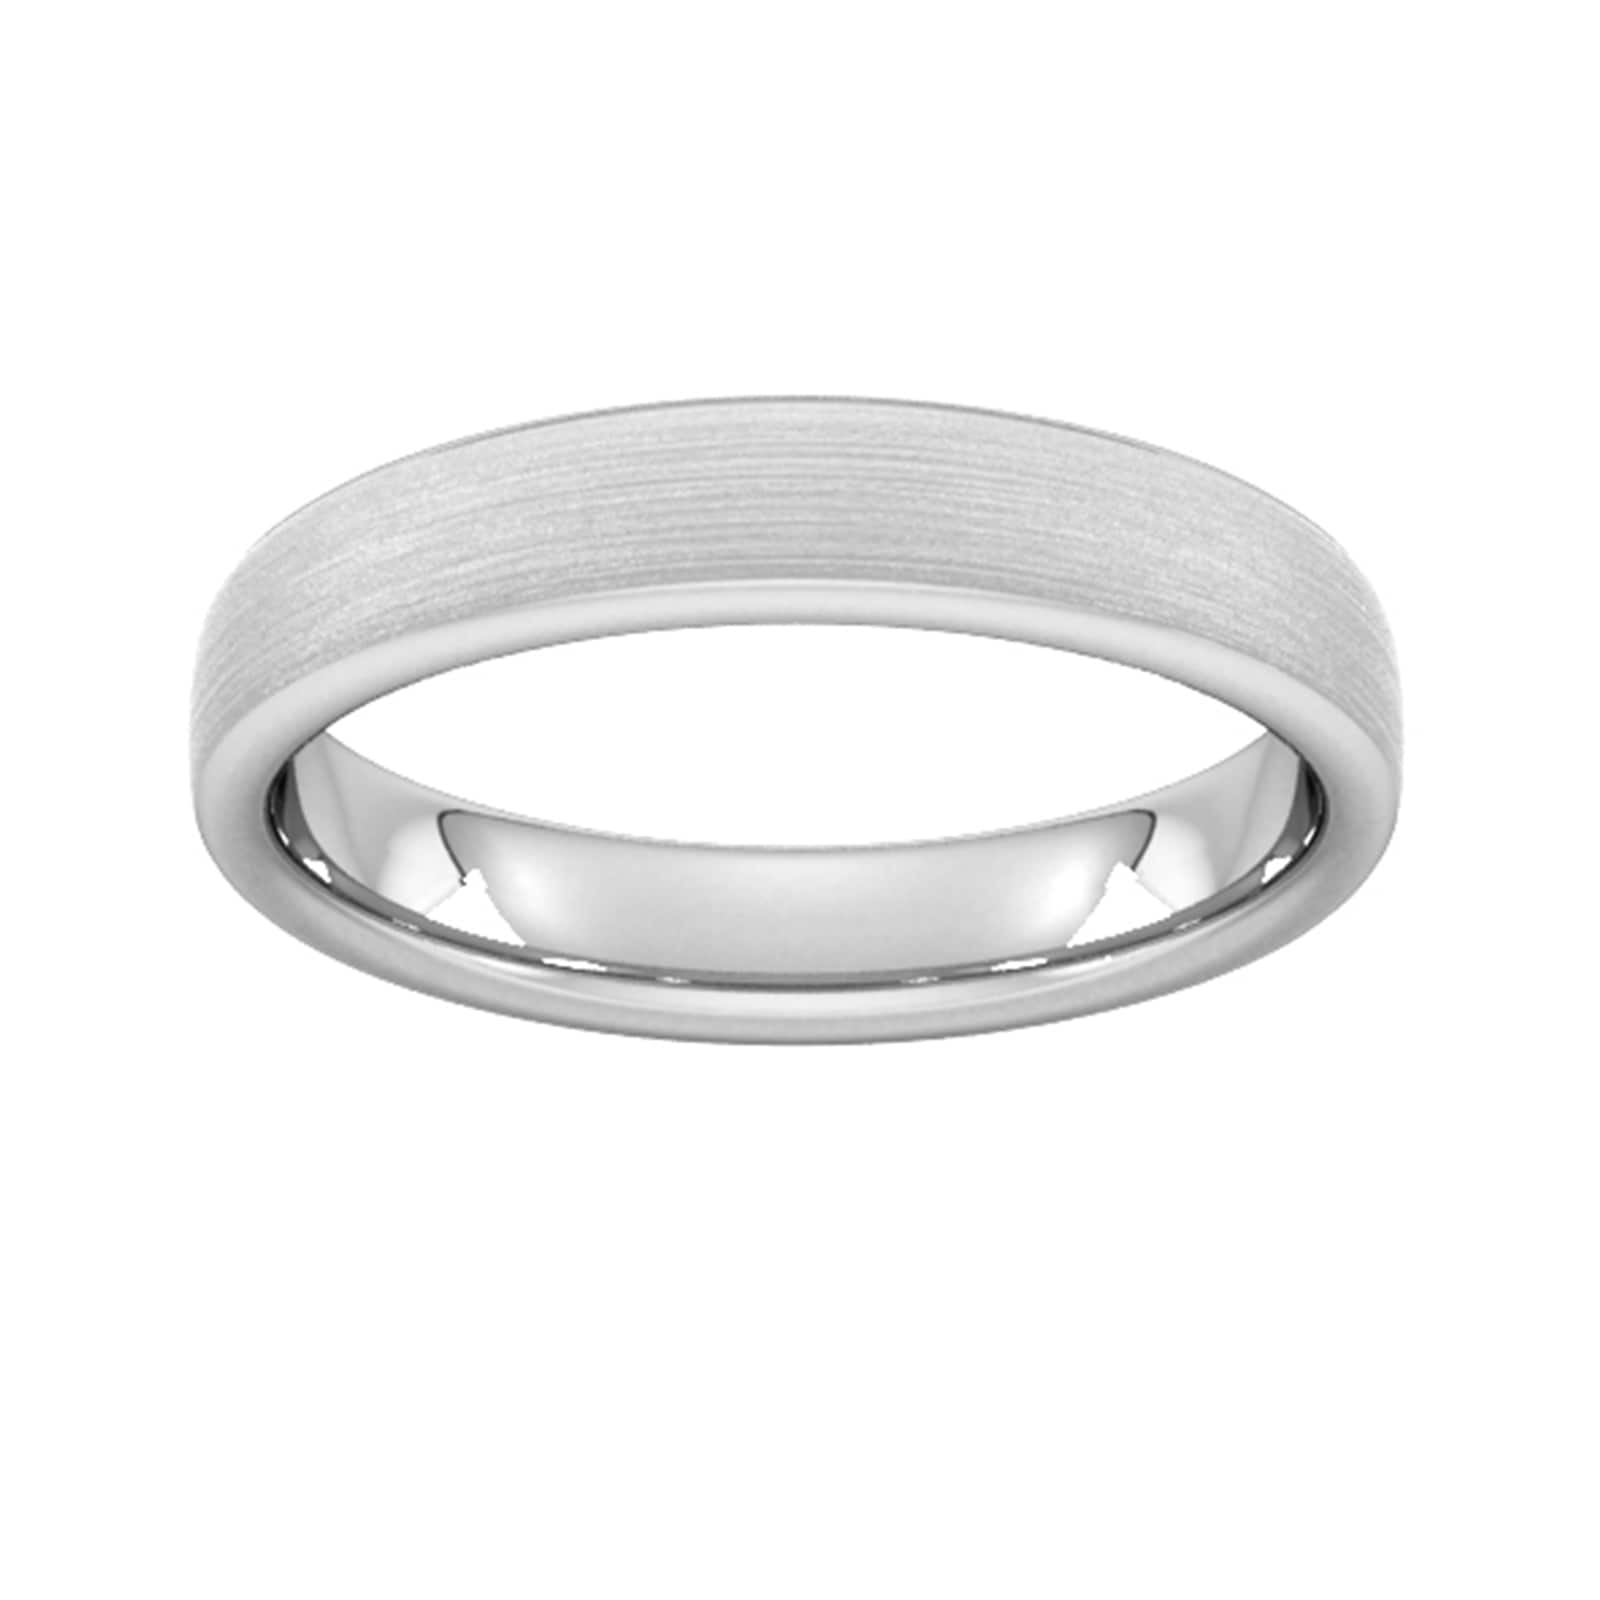 4mm Slight Court Standard Matt Finished Wedding Ring In 18 Carat White Gold - Ring Size S